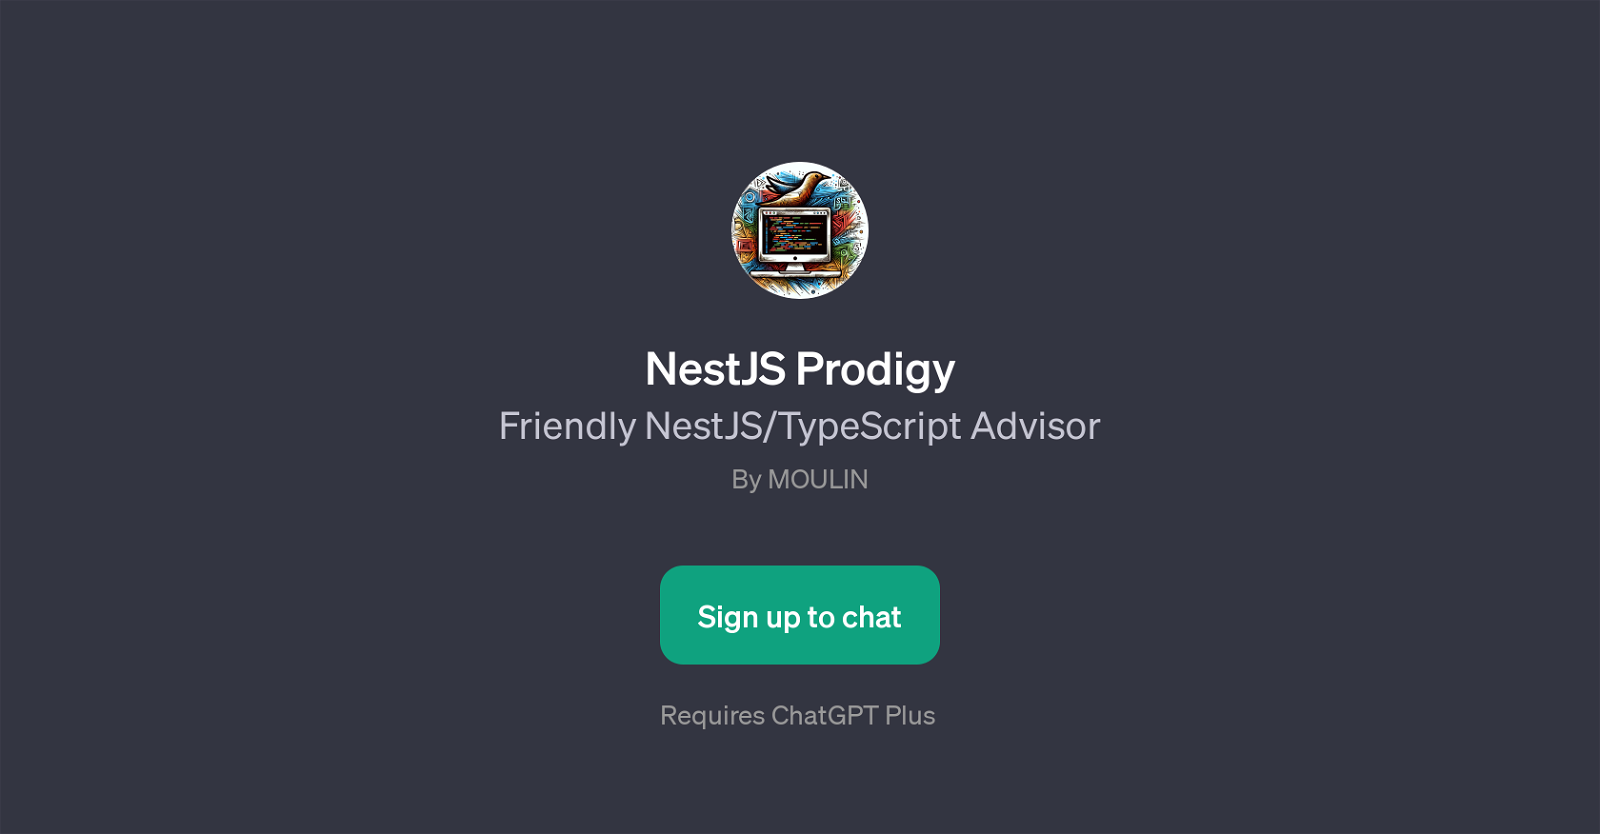 NestJS Prodigy website